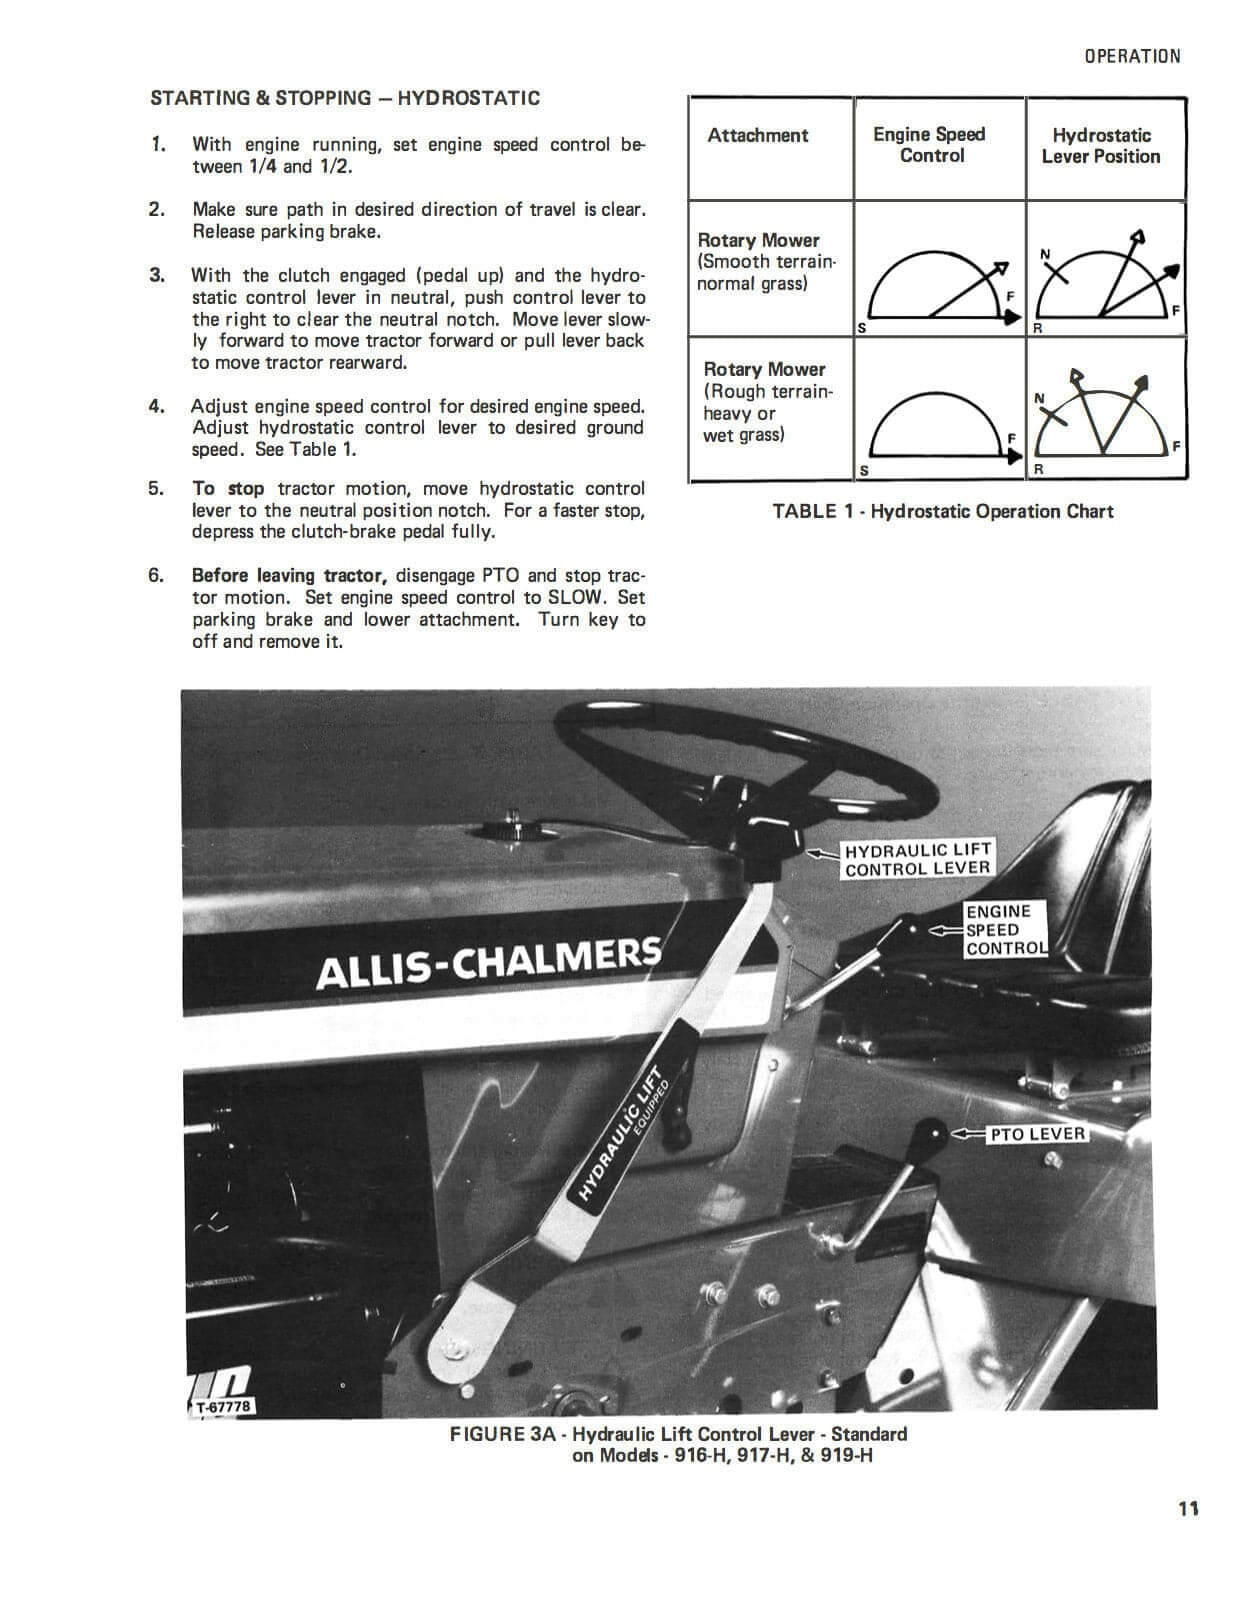 Allis Chalmers Model 900 Series Lawn & Garden Tractors - Operator's Manual valuable information.